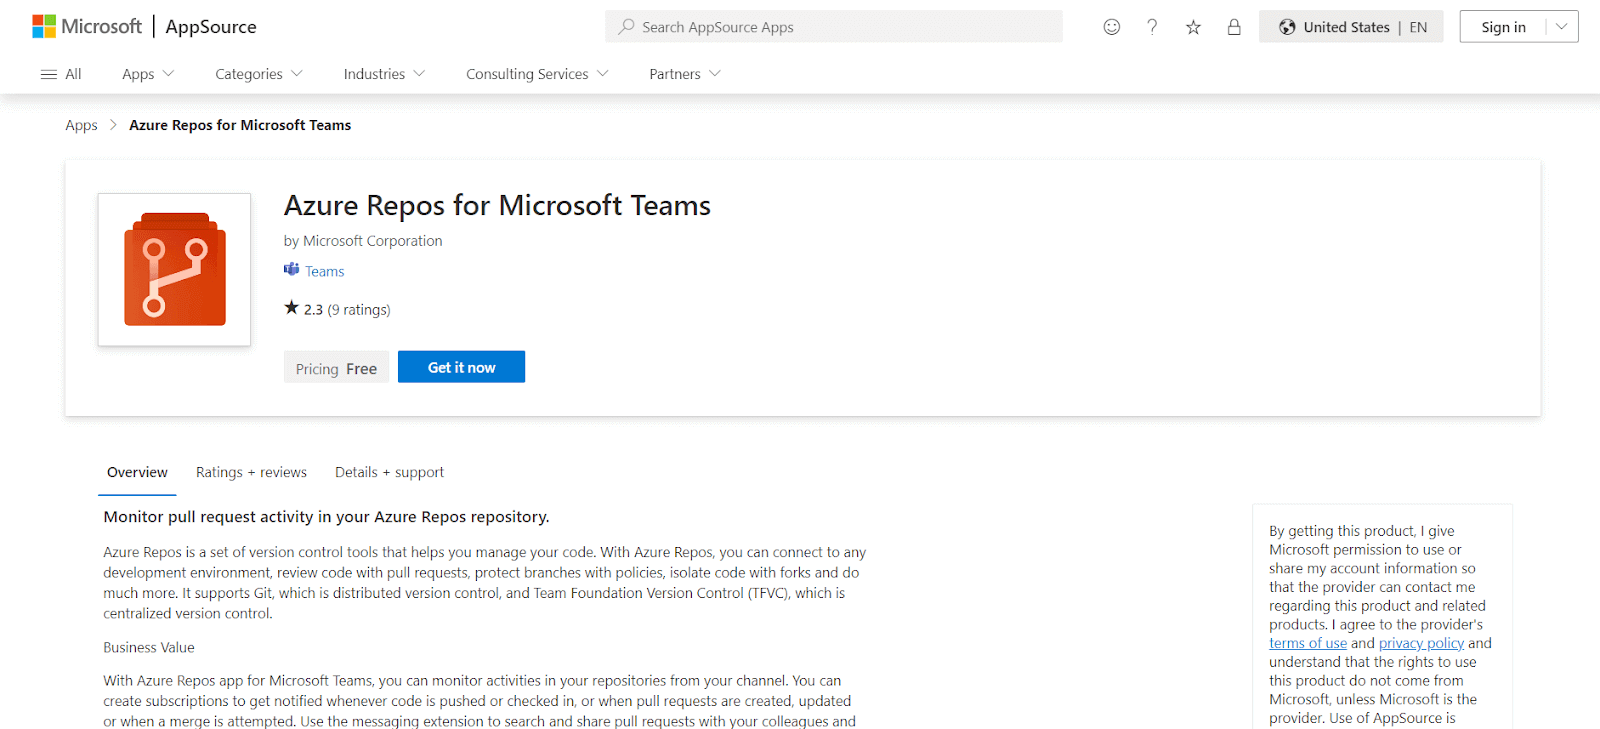 Azure Repos for Microsoft Teams